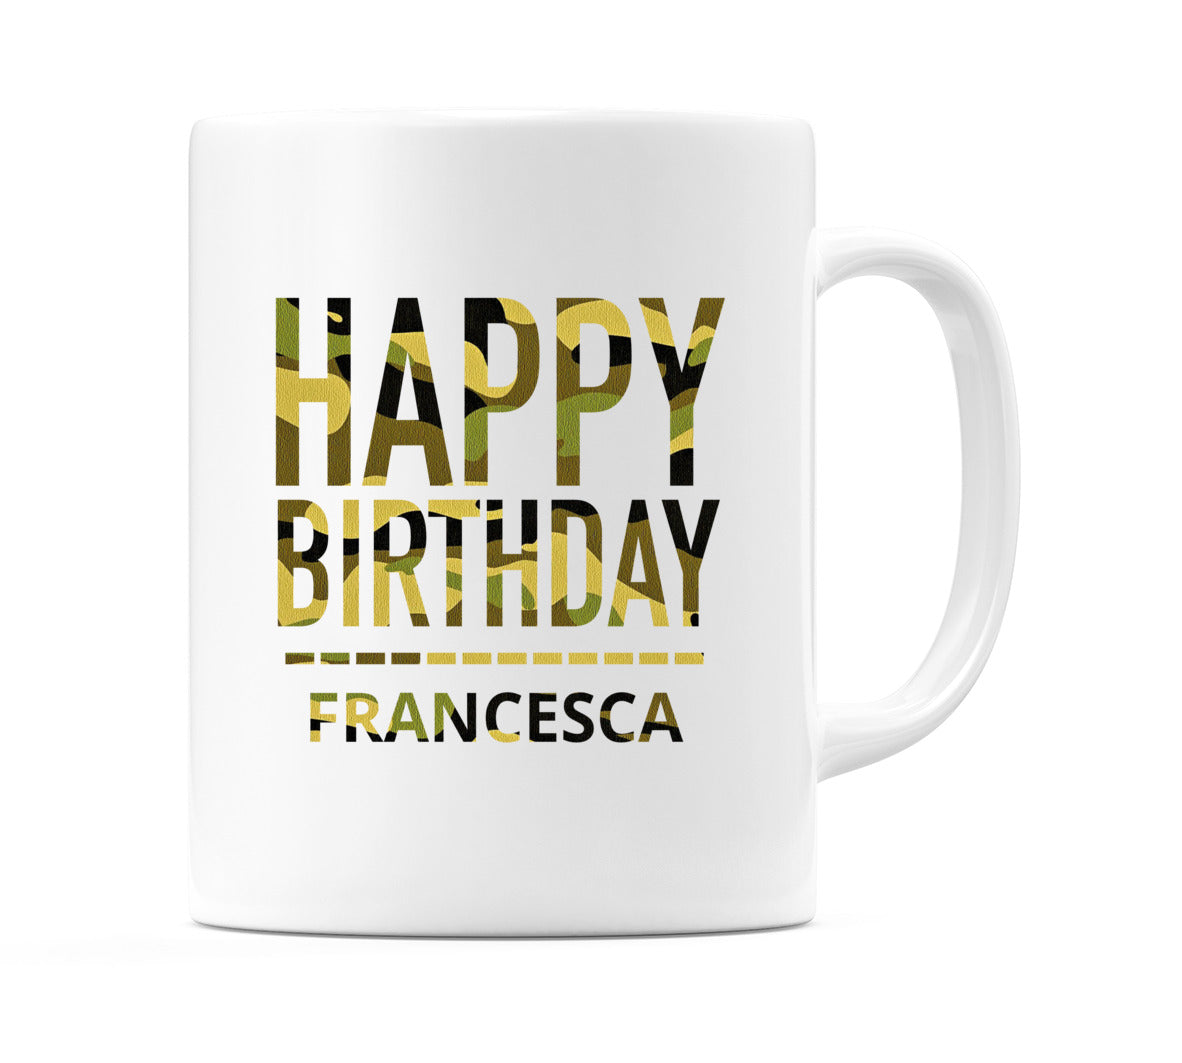 Happy Birthday Francesca (Camo) Mug Cup by WeDoMugs